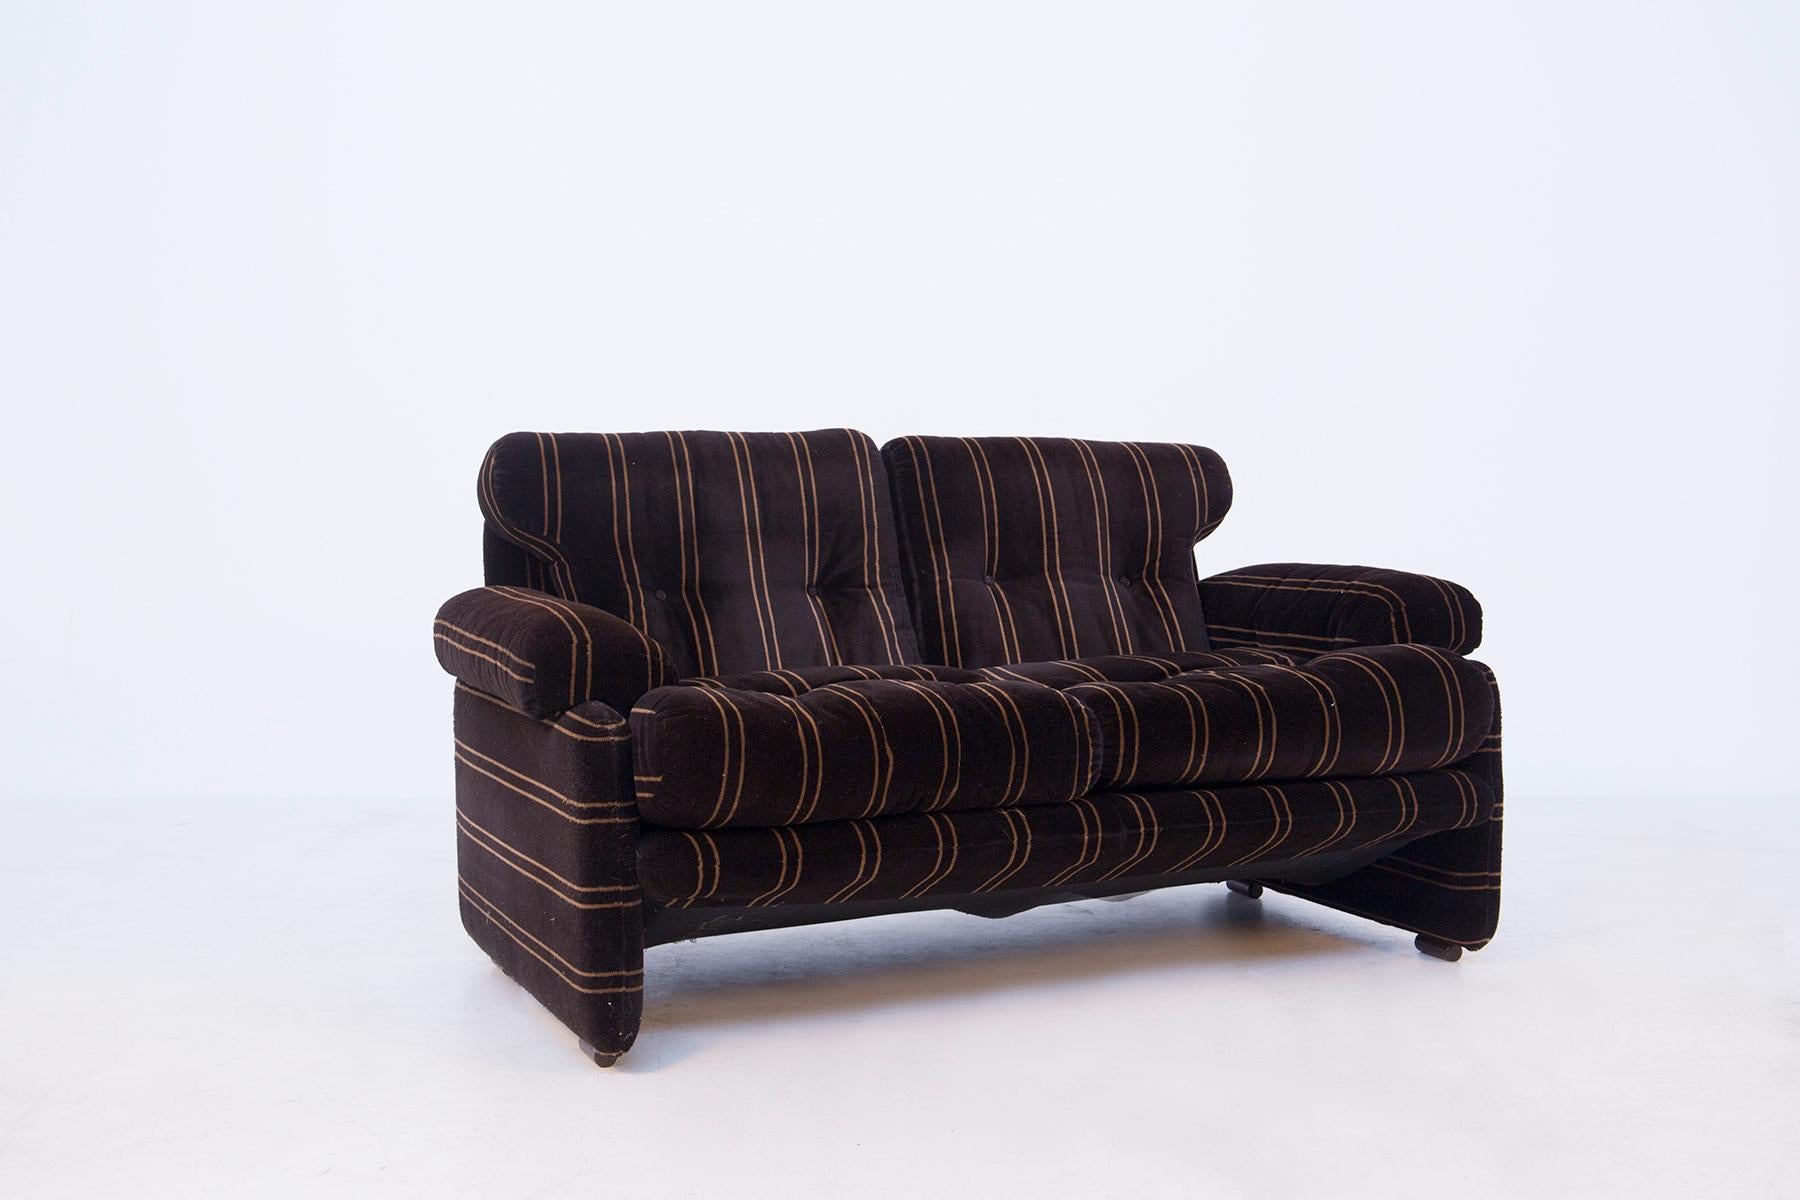 Coronado sofa designed by Tobia Scarpa.
The sofa has an original B&B Italia label under its cushions. Italy 1970.
The fabric of the Coronado sofa is original of the time in brown corduroy. Inside there is an original label.
Coronado Sofa is a two